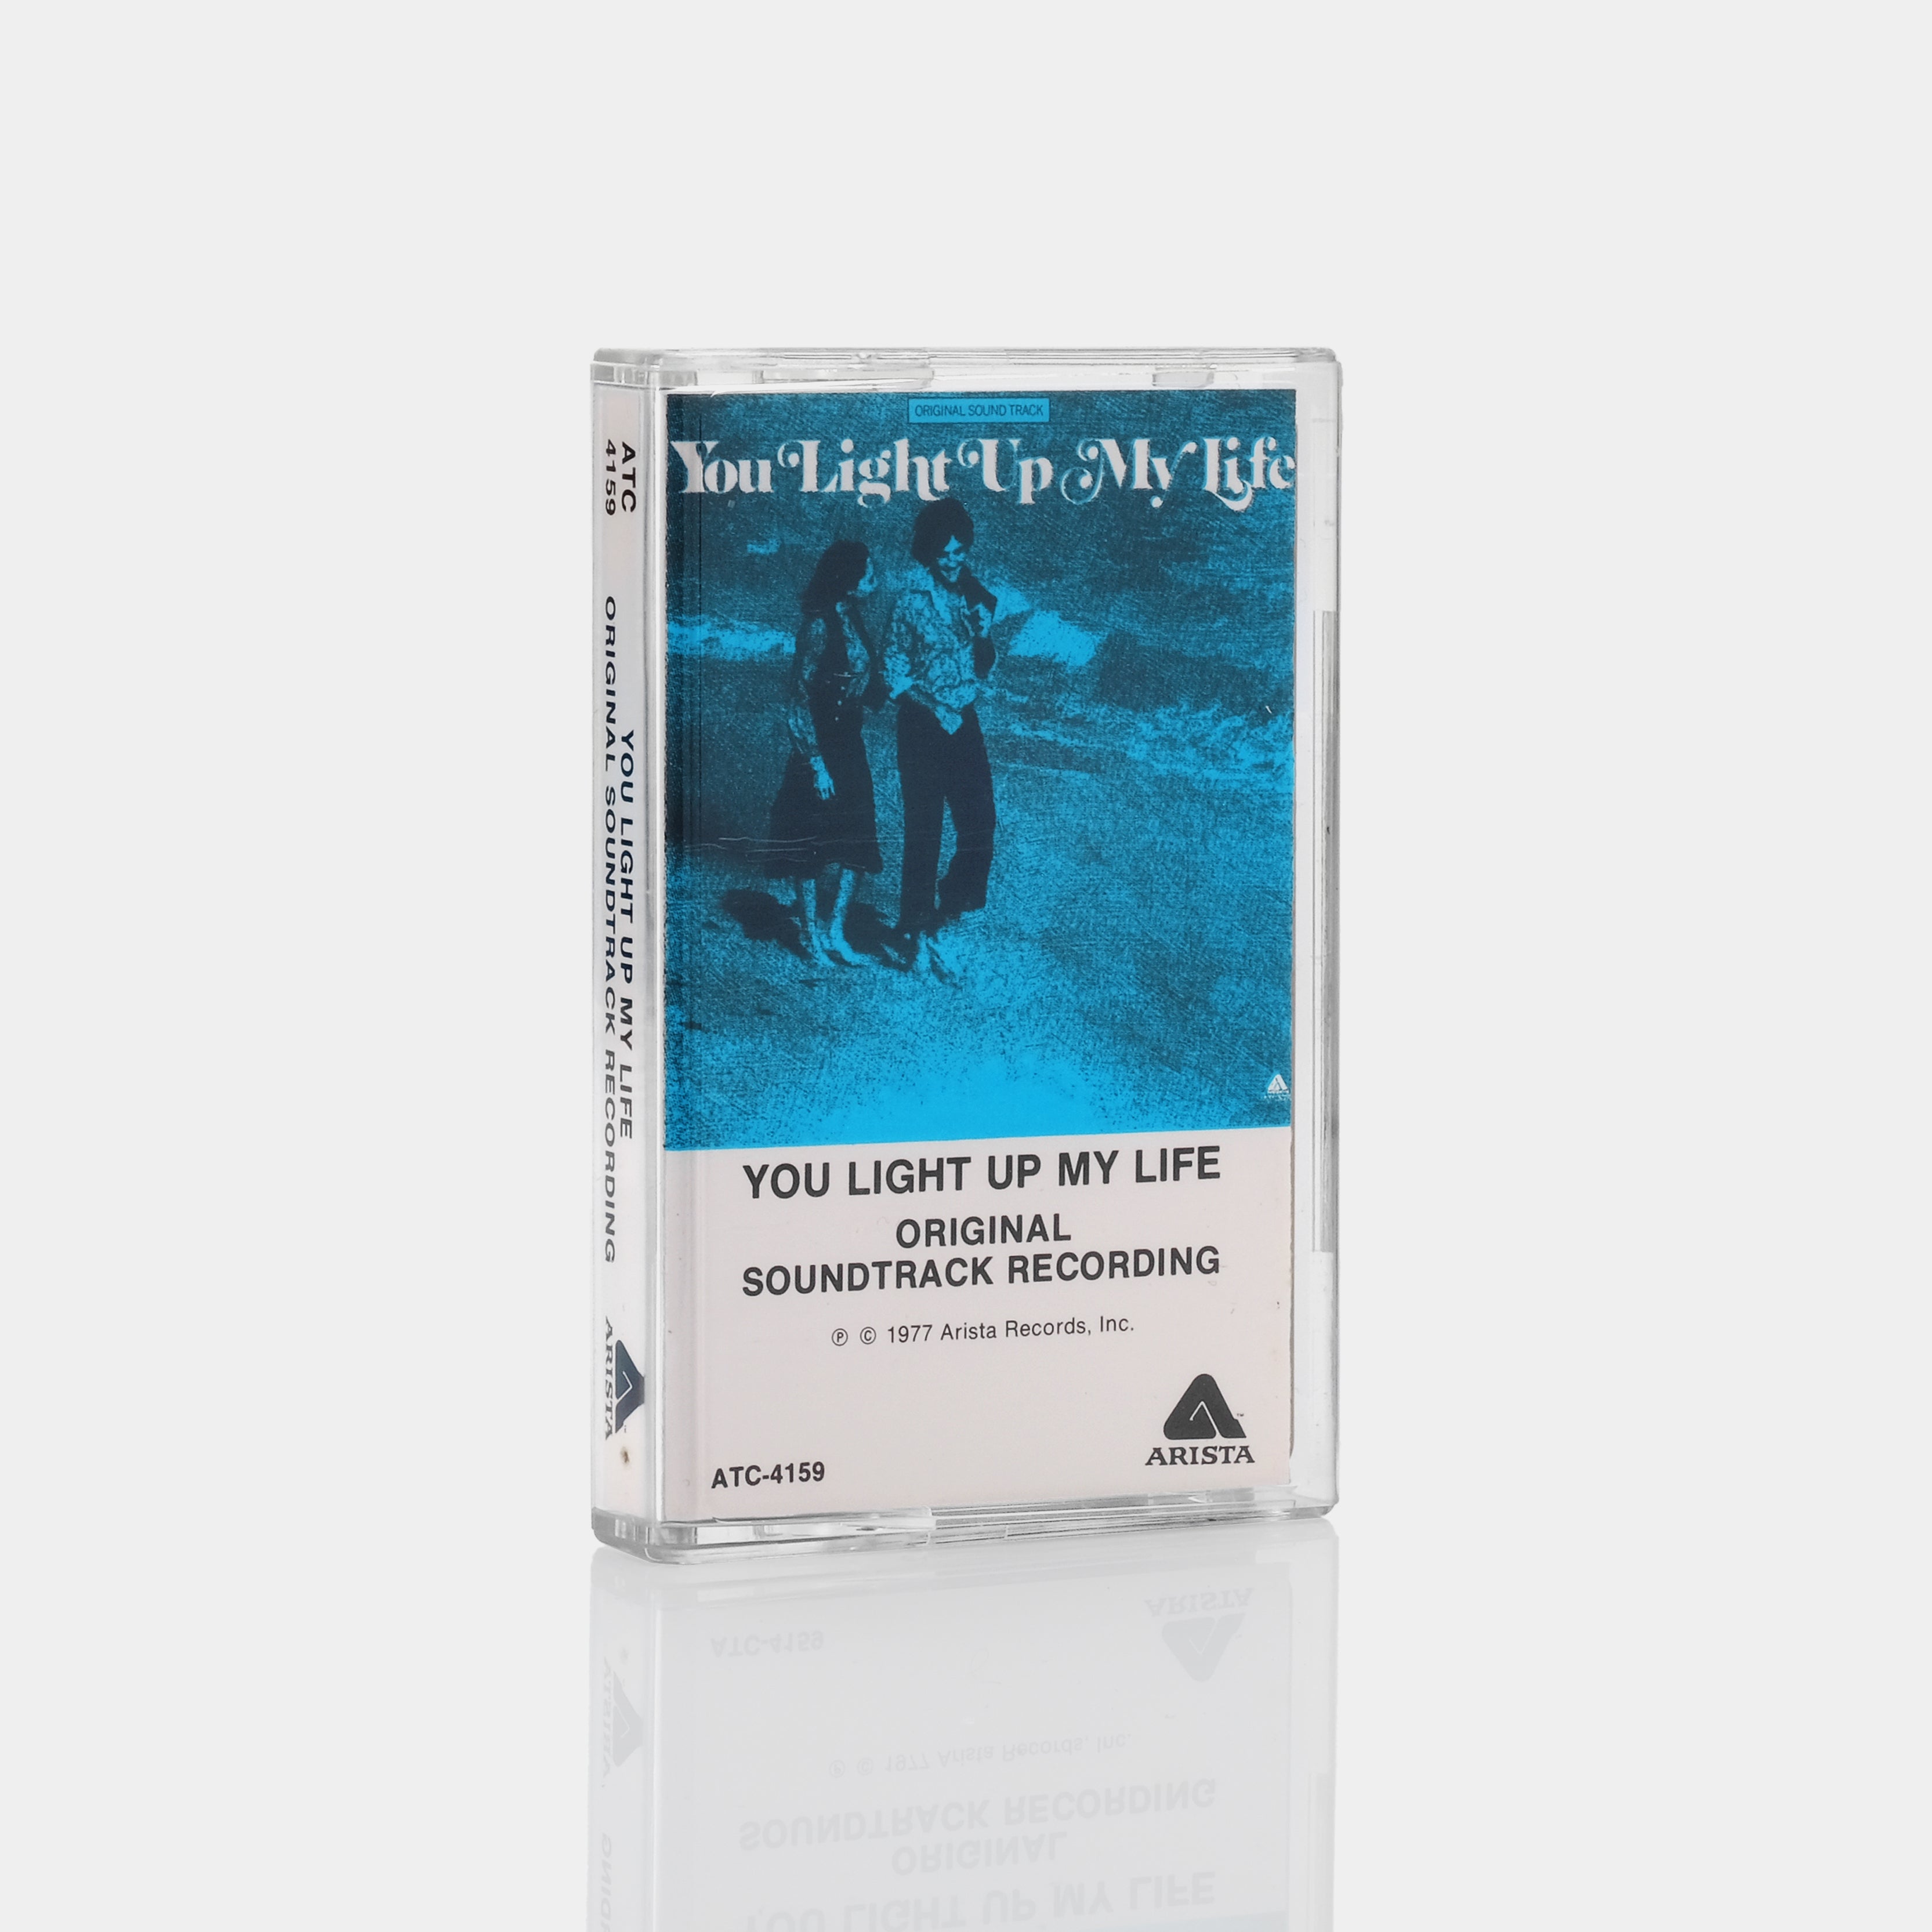 Joe Brooks - You Light Up My Life (Original Soundtrack Recording) Cassette Tape